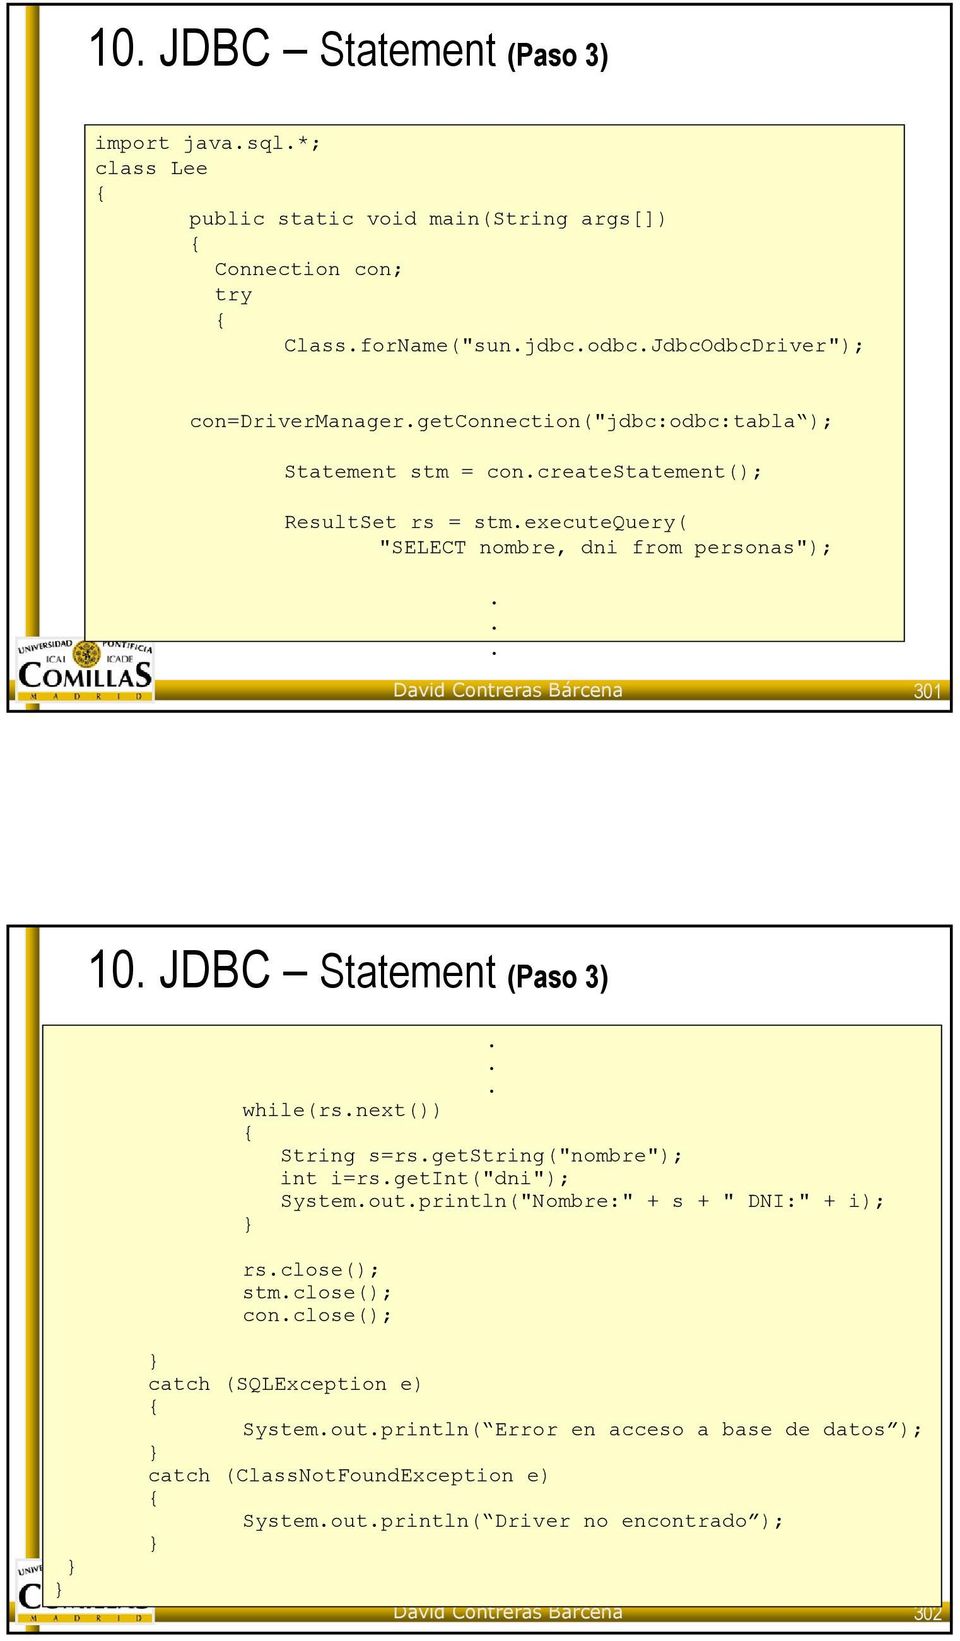 Bárcena 301 10 JDBC Statement (Paso 3) while(rsnext()) String s=rsgetstring("nombre"); int i=rsgetint("dni"); Systemoutprintln("Nombre:" + s + " DNI:" + i); rsclose();